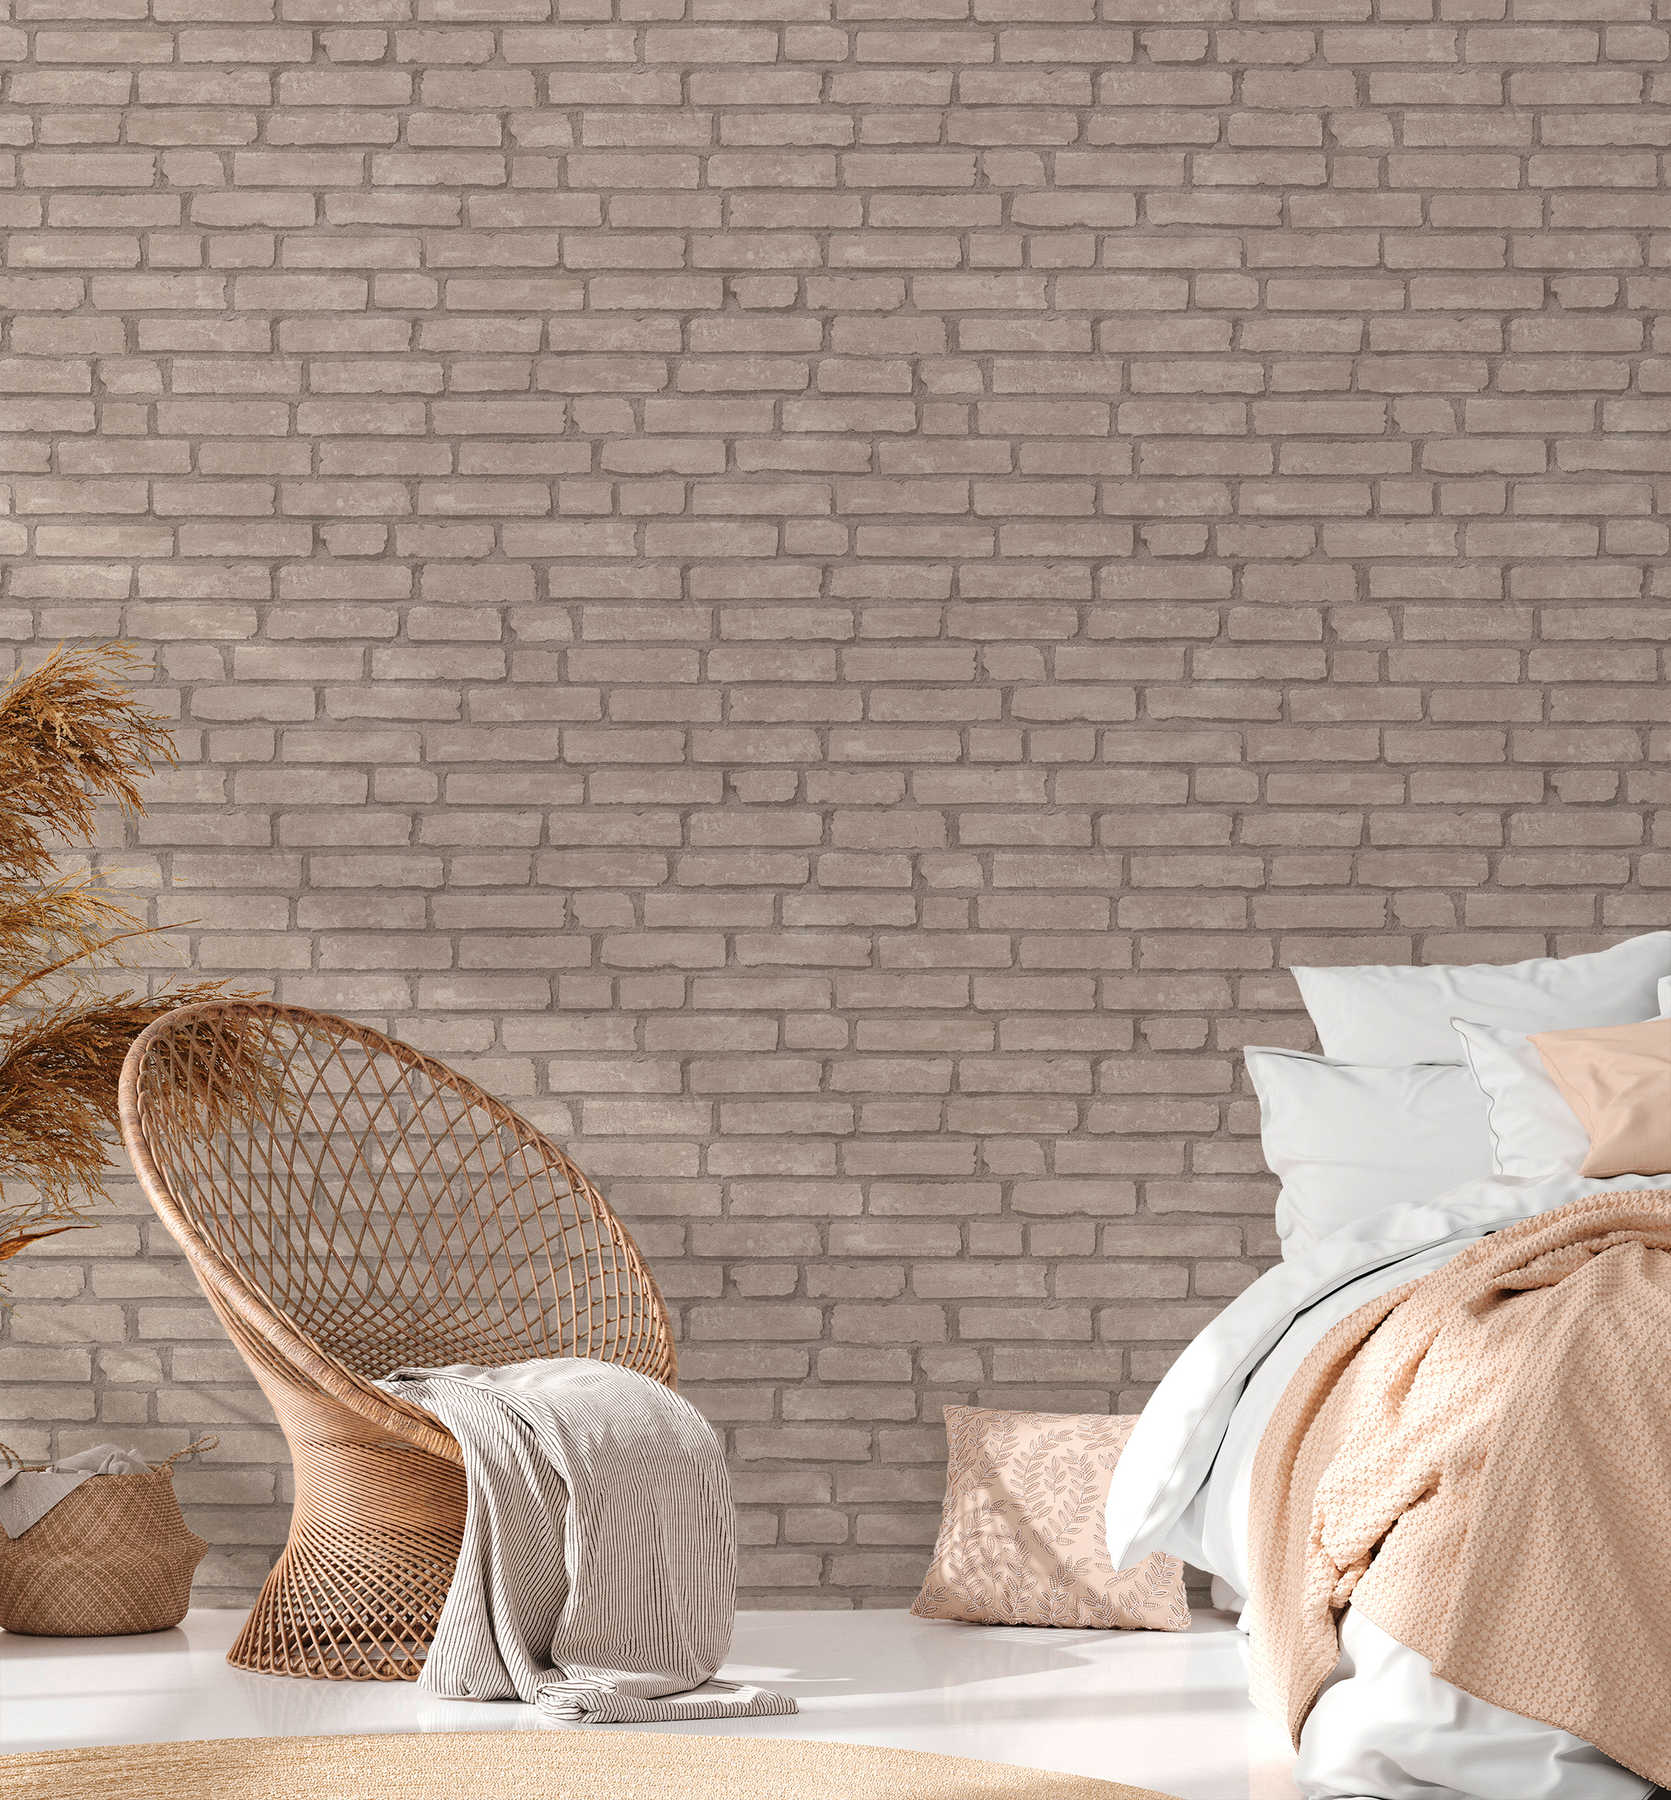             Stone wallpaper brown brick masonry - grey, beige
        